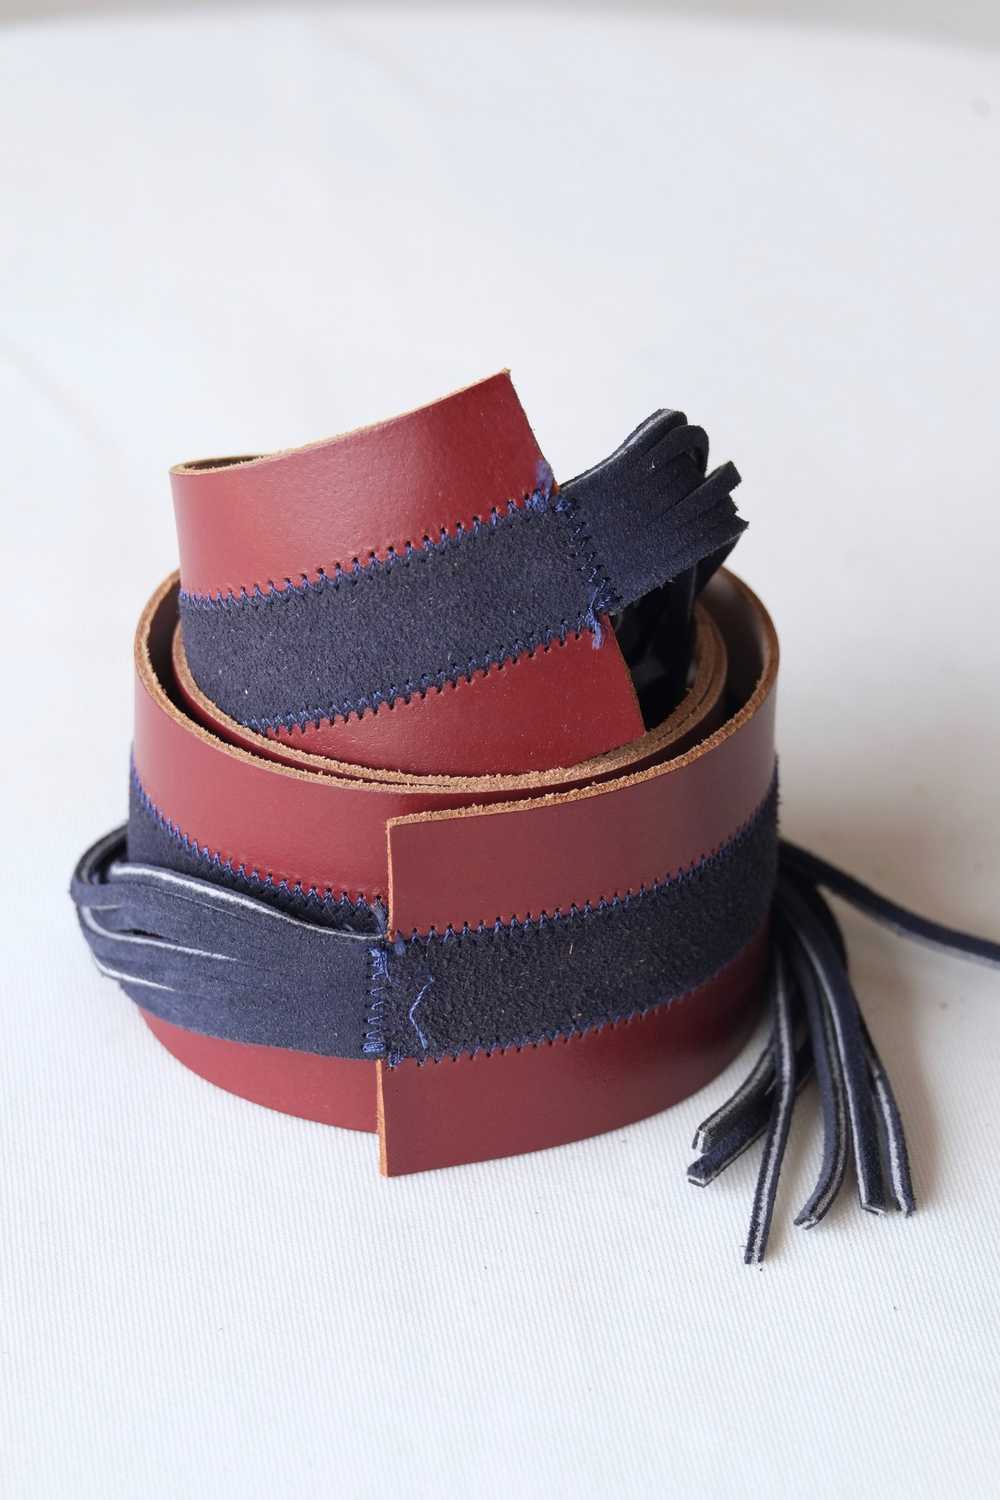 L'AIGLON Leather & Suede Tassels Belt - image 4